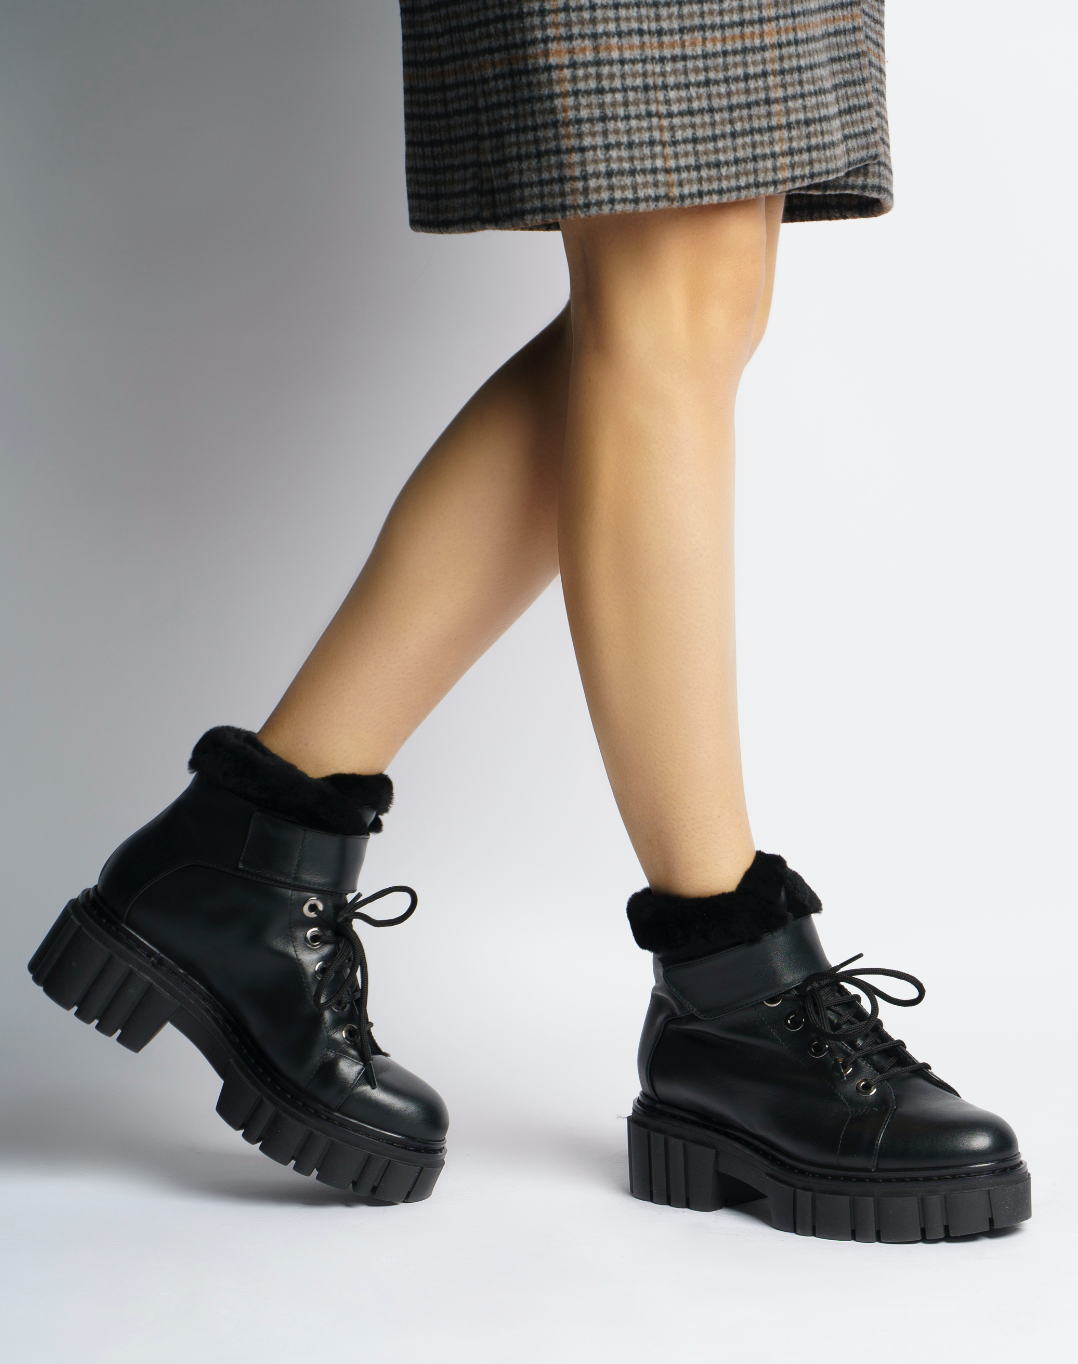 Takara Black Winter Ankle Boots 2030-01 - 2